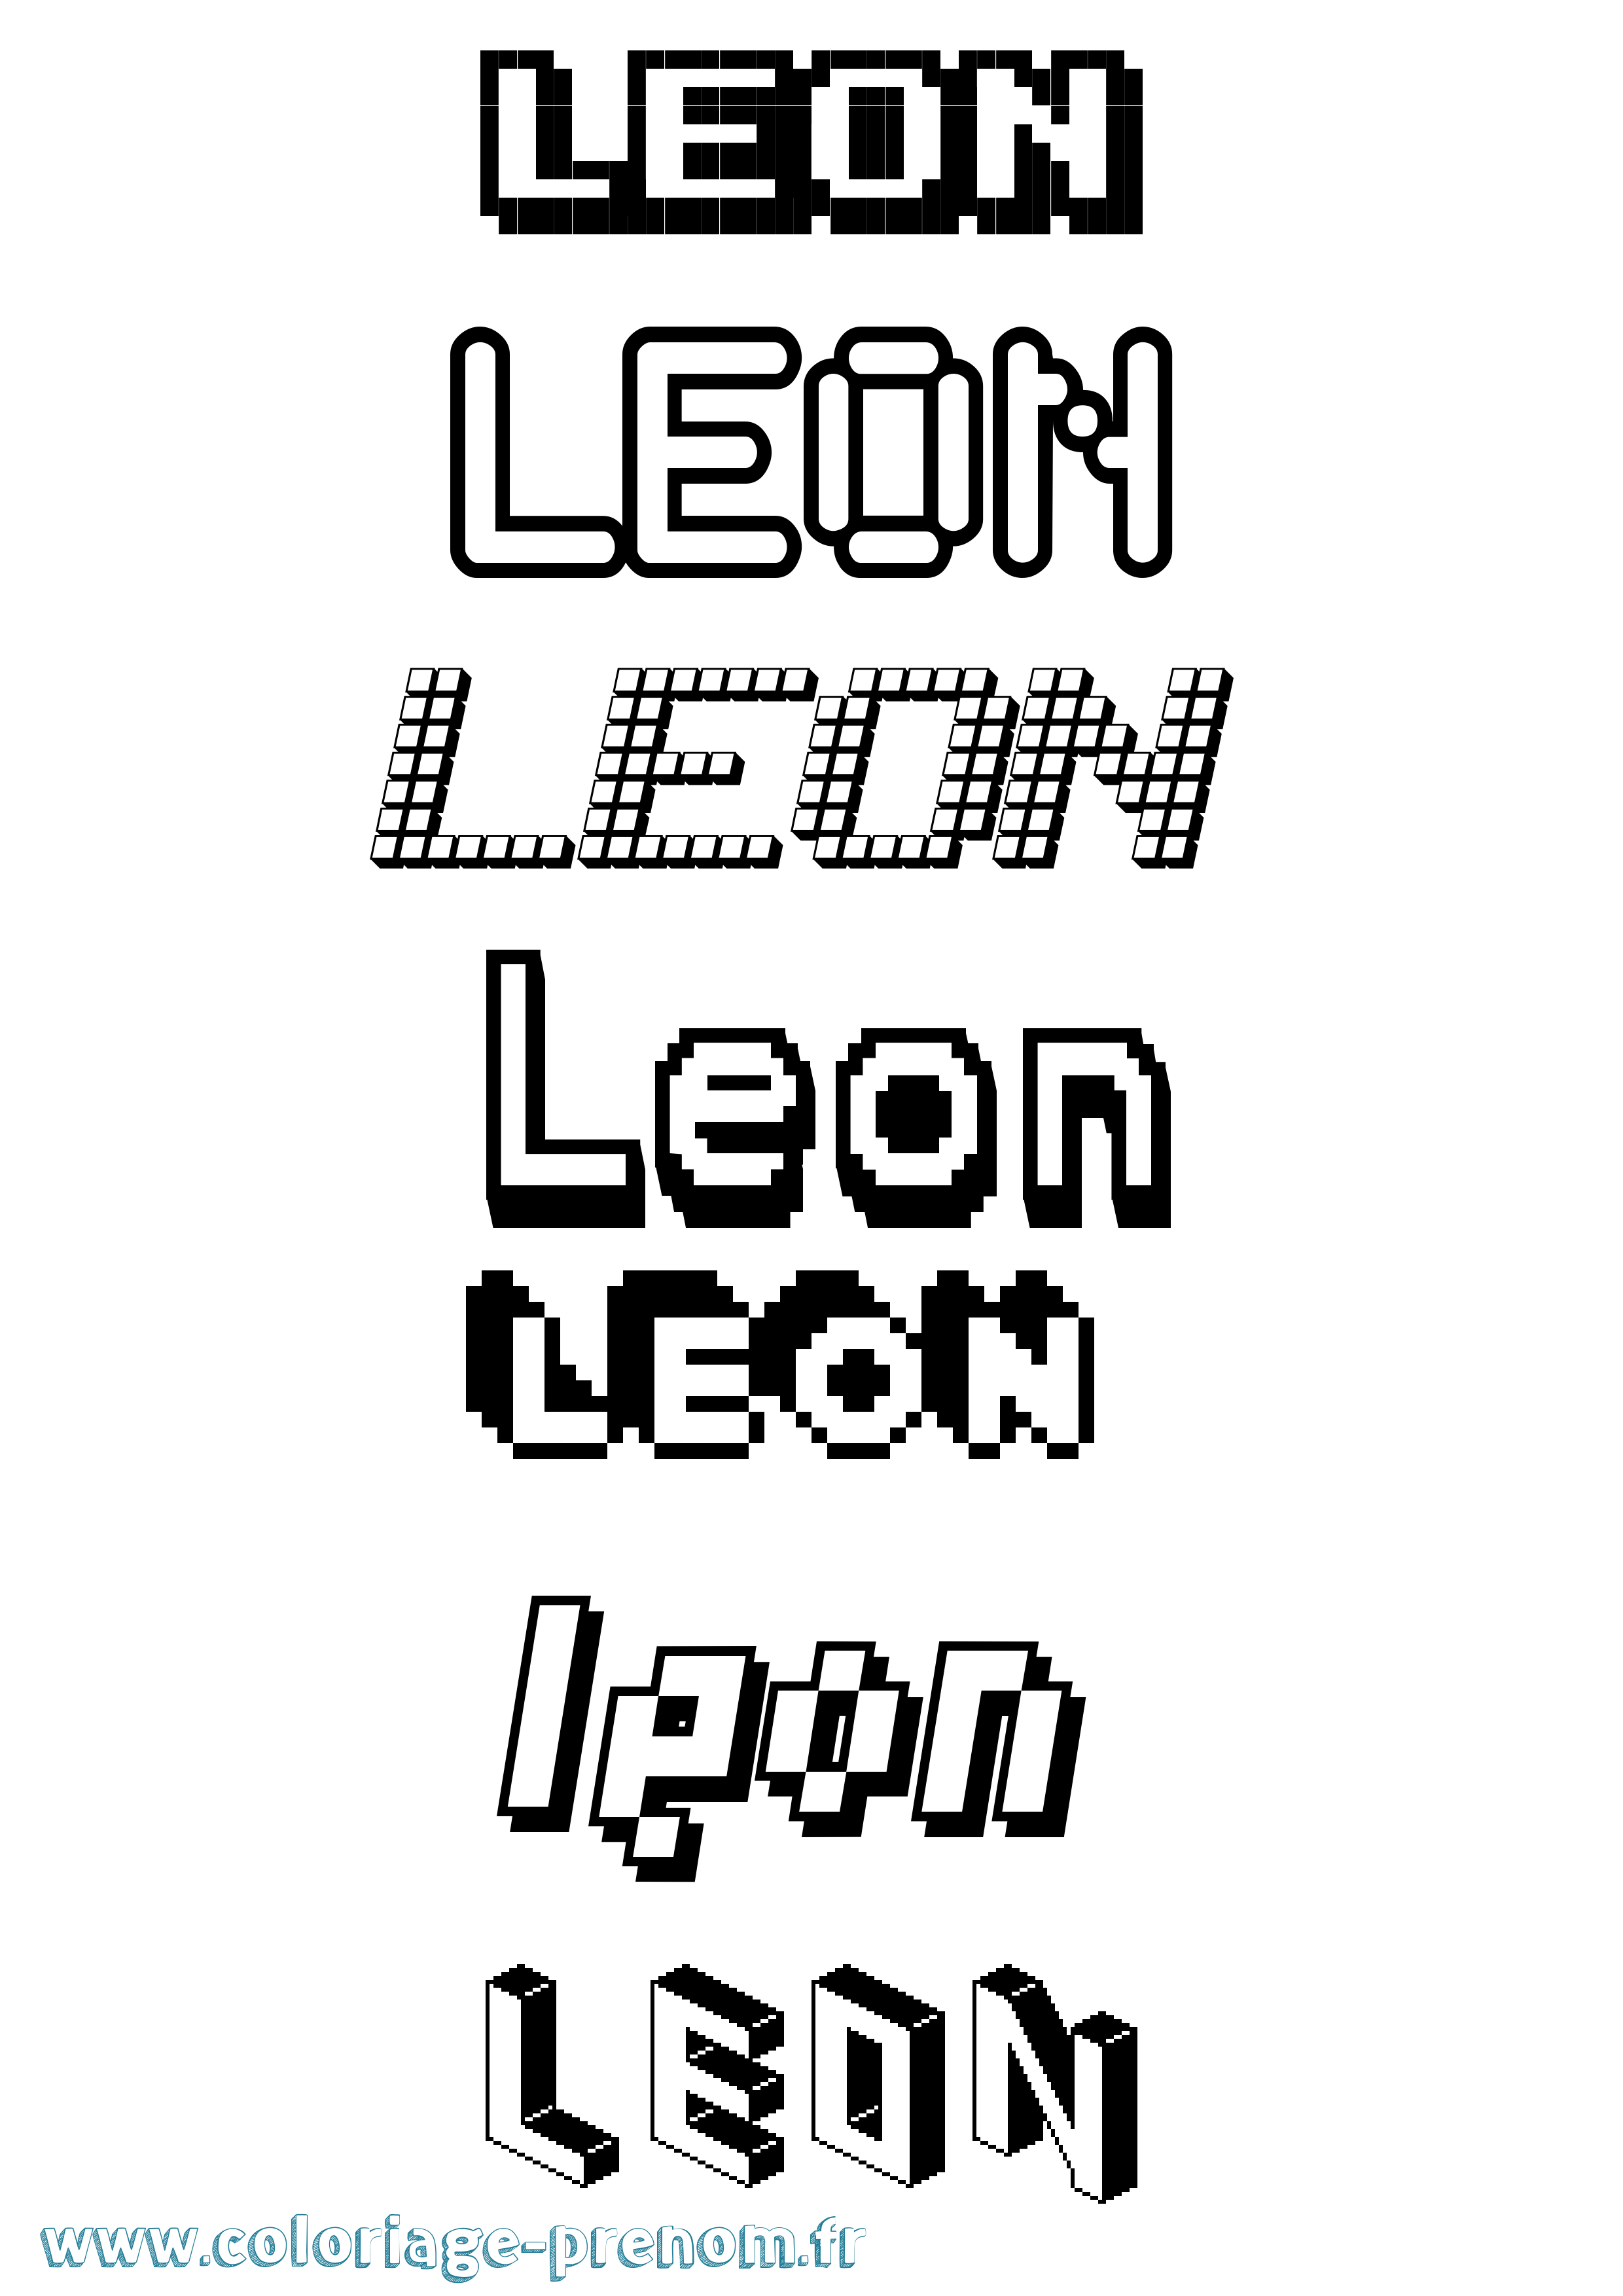 Coloriage prénom Leon Pixel